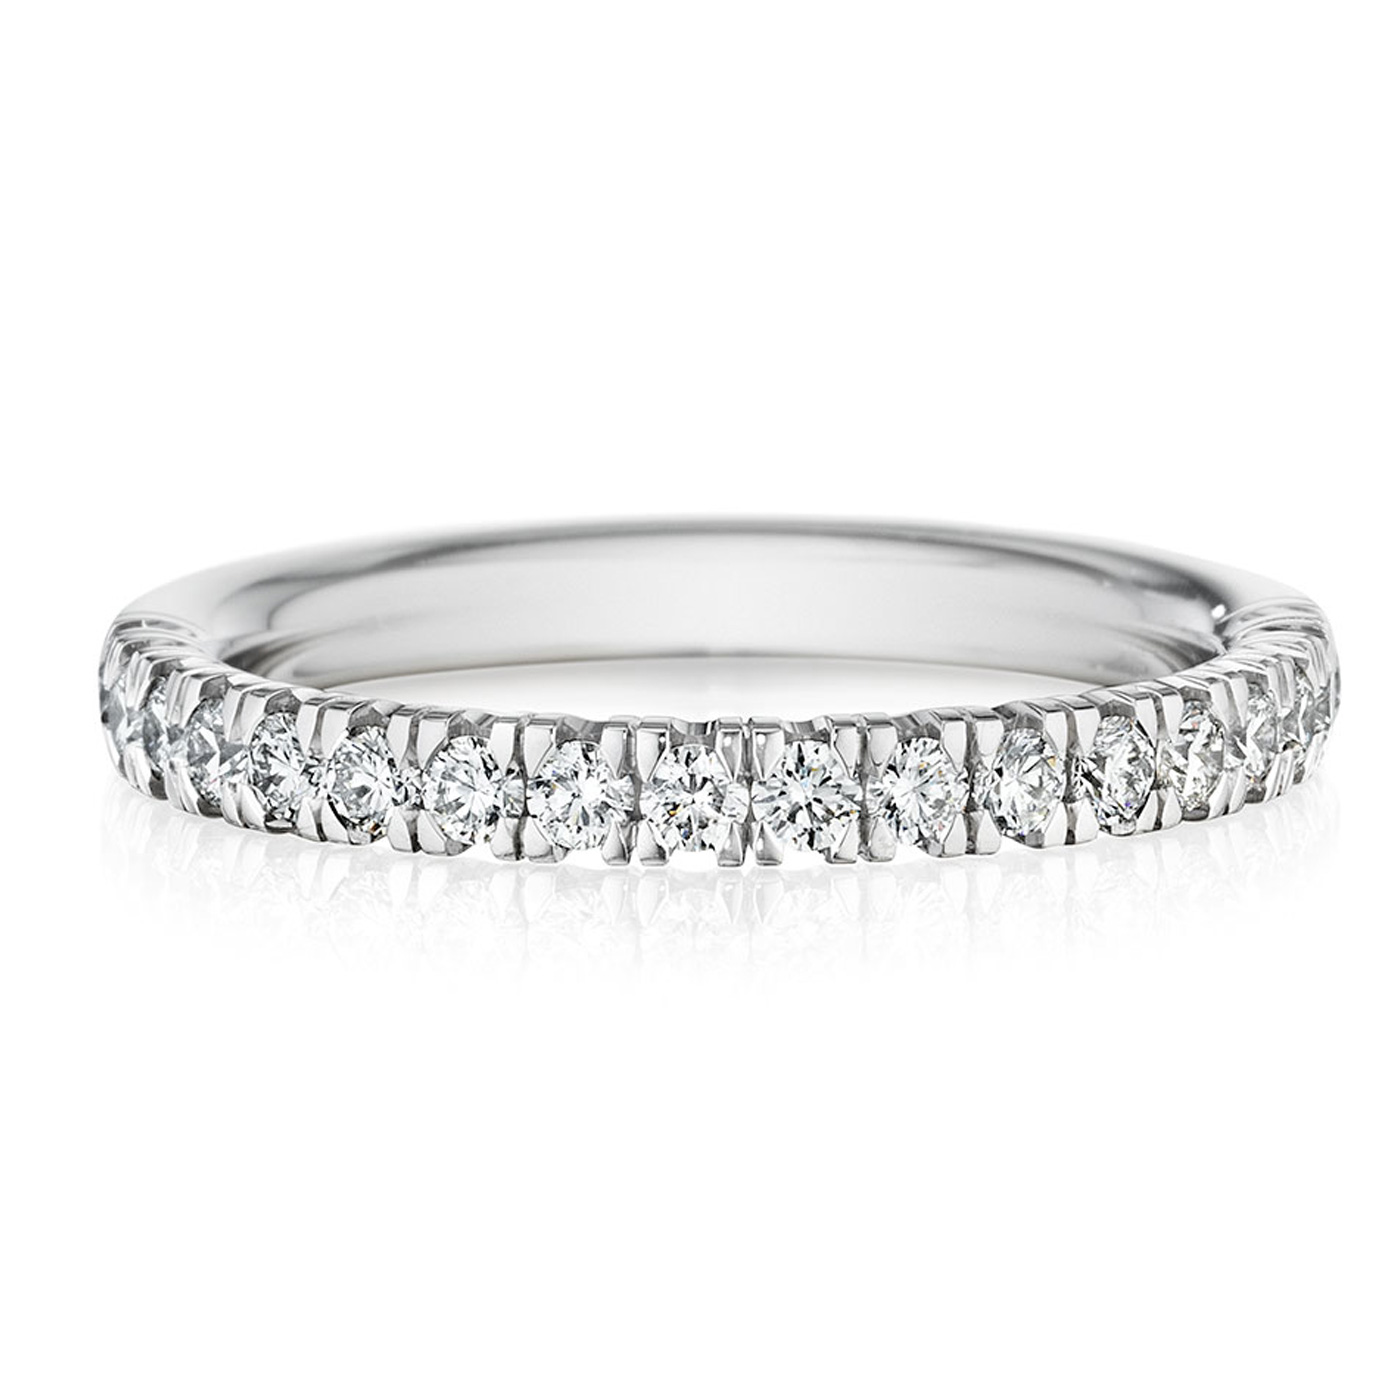 246754 Christian Bauer 18 Karat Diamond  Wedding Ring / Band